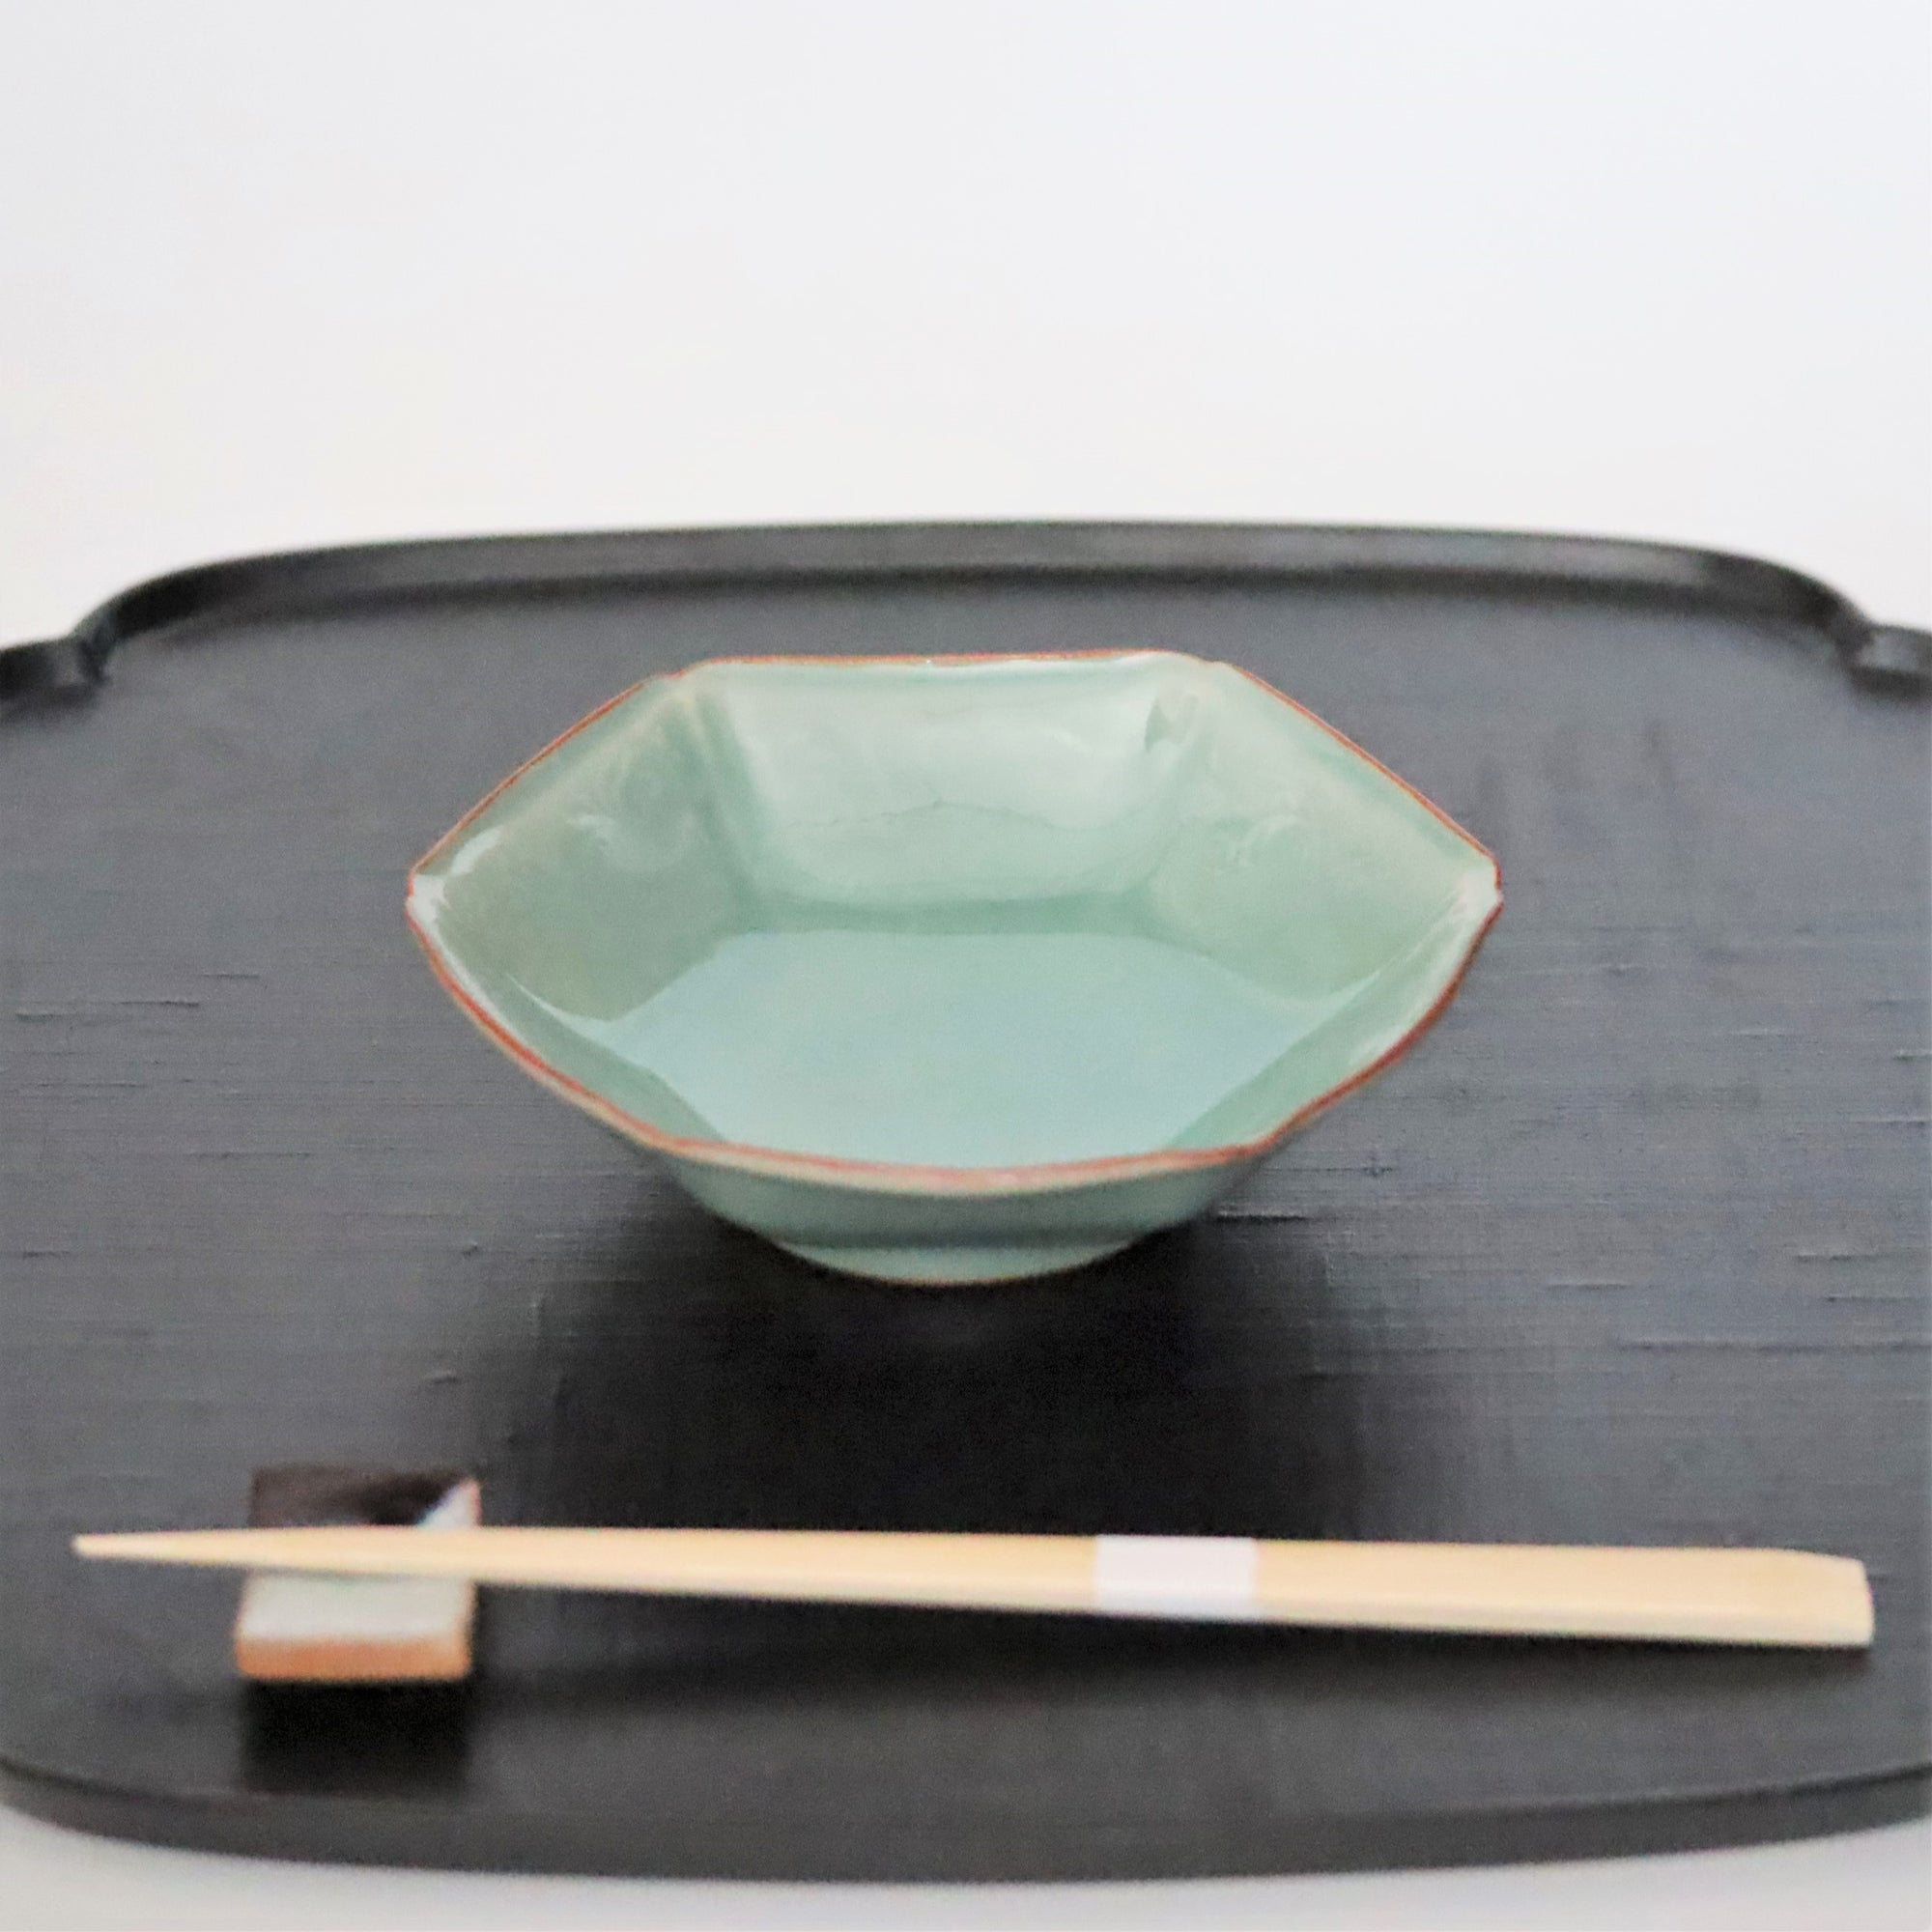 【Hirokazu Kato】Flower-patterned Hexagonal celadon bowl